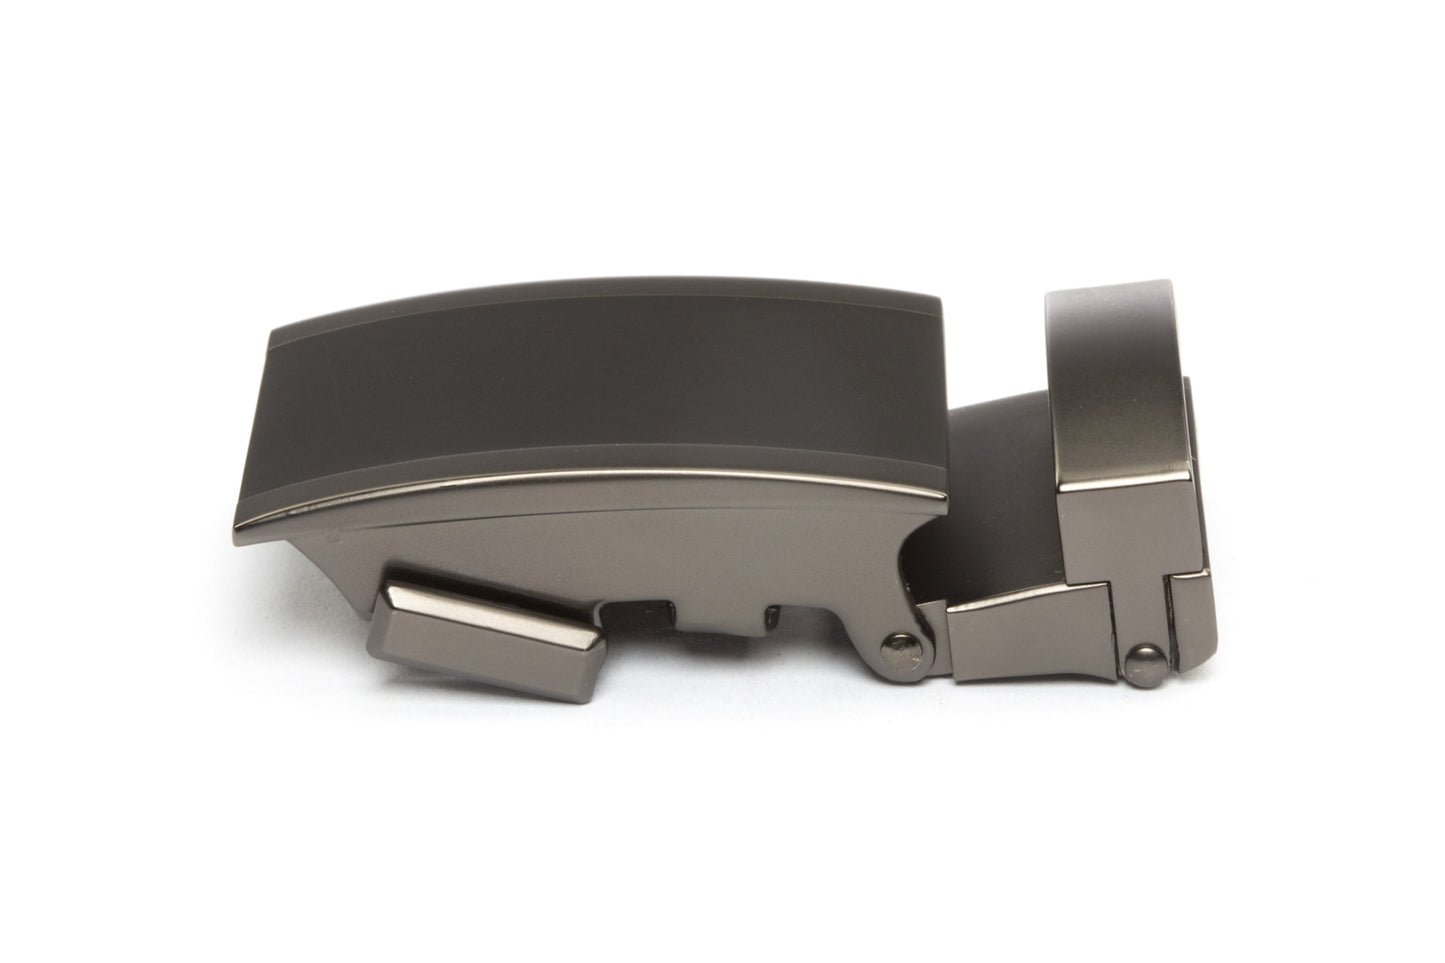 Men's onyx ratchet belt buckle in matte gunmetal with a 1.25-inch width, left side view.